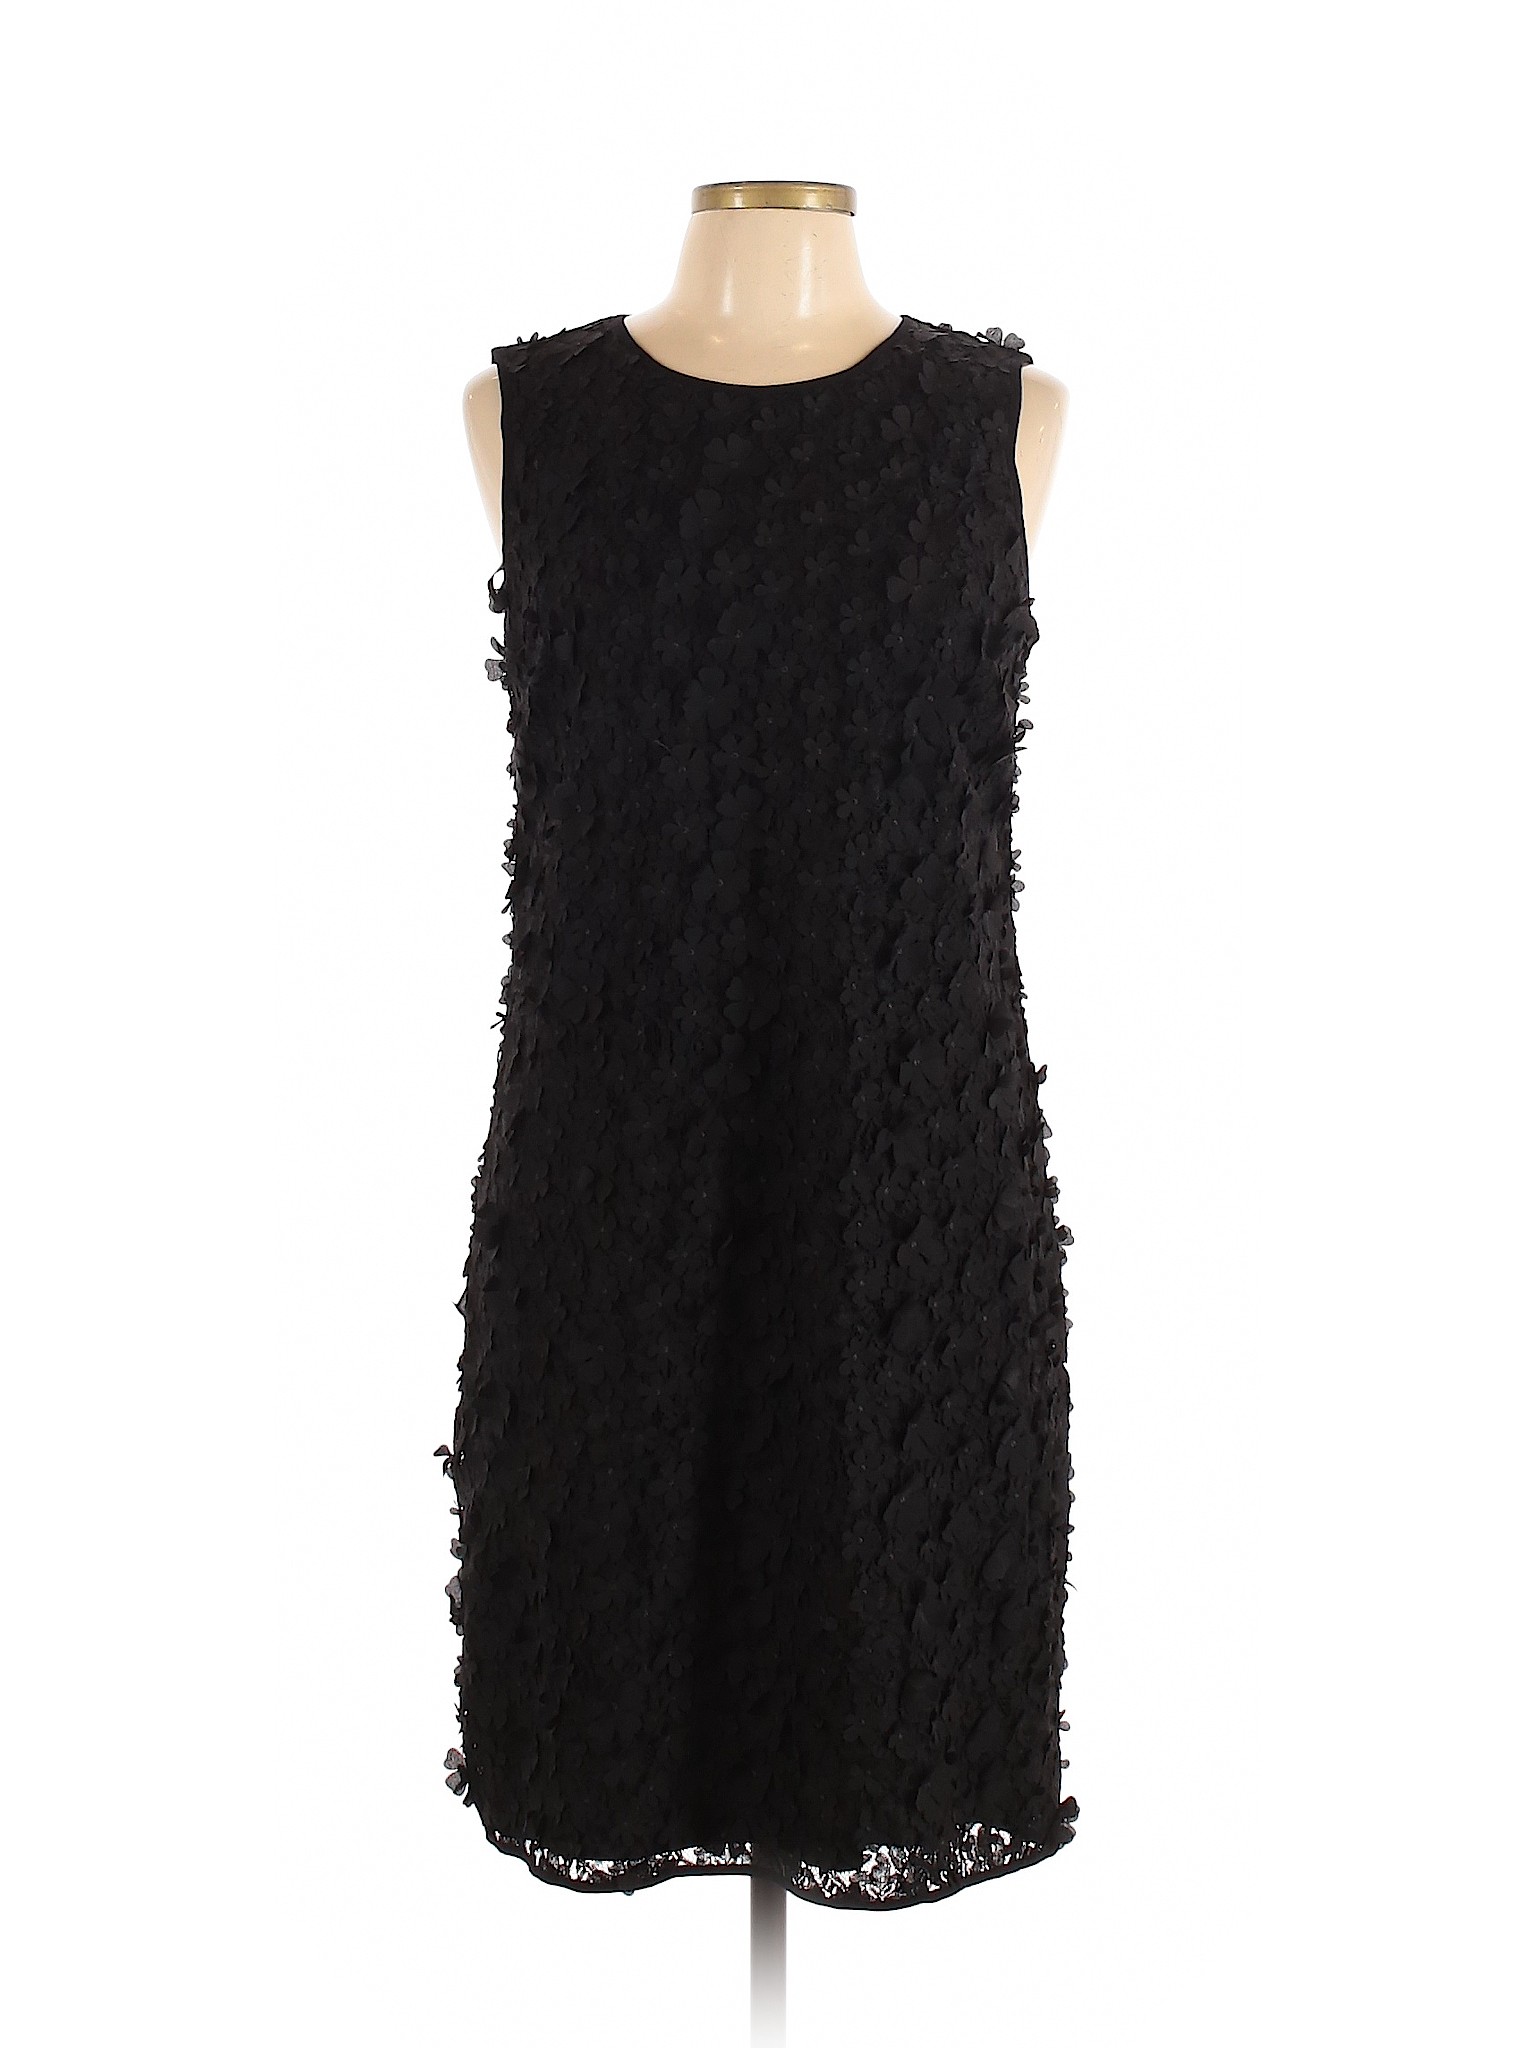 Karl Lagerfeld Paris Women Black Cocktail Dress 10 | eBay